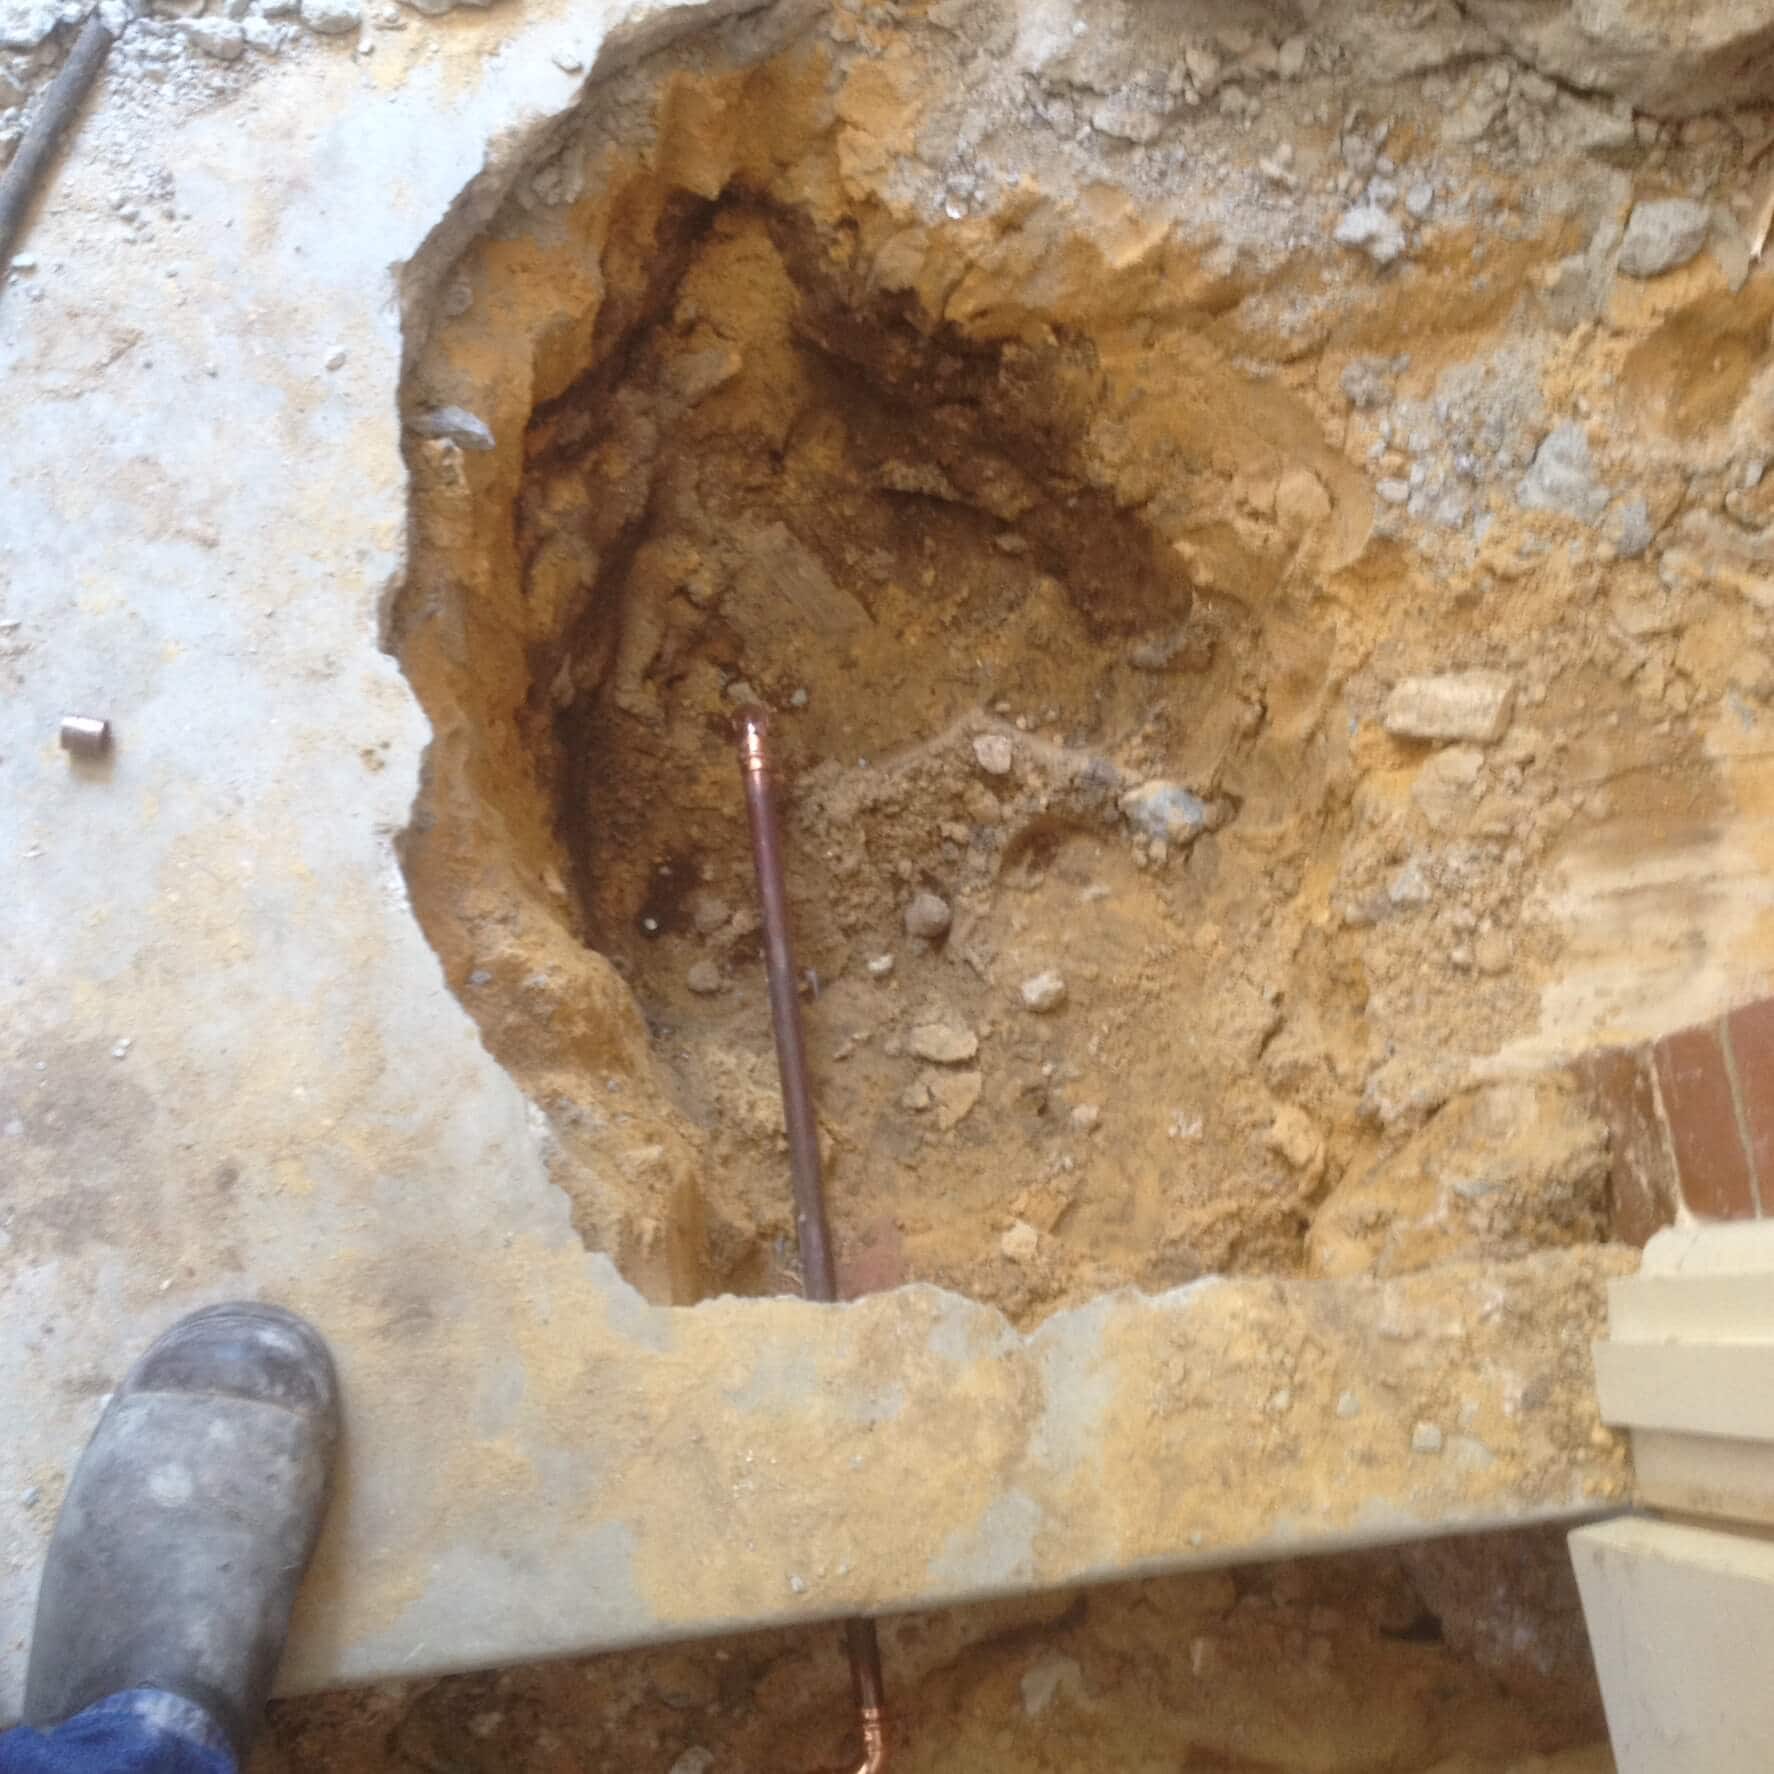 Everyday Plumbers Residential Bursts and Leak Detection Plumber - Copper Pipe Repair 0351